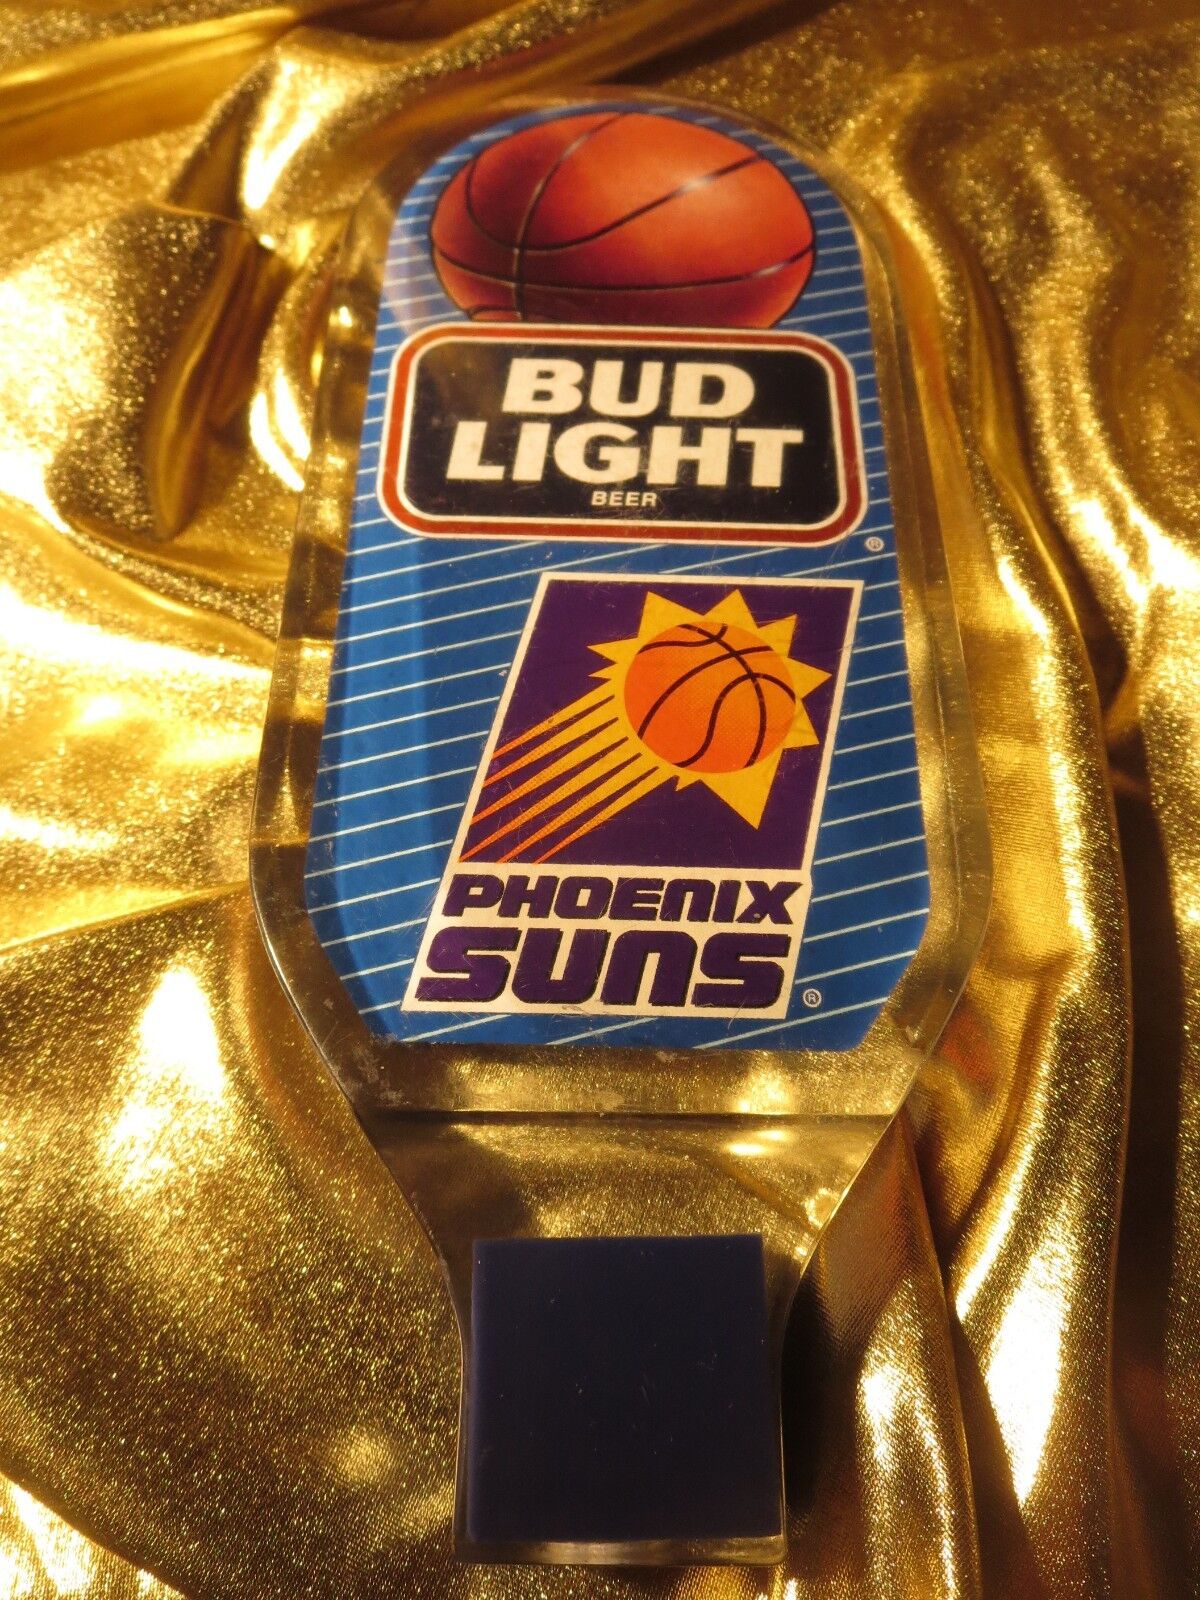 Phoenix Suns NBA Bud Light Budweiser Arena Beer Bar Tap Handle 